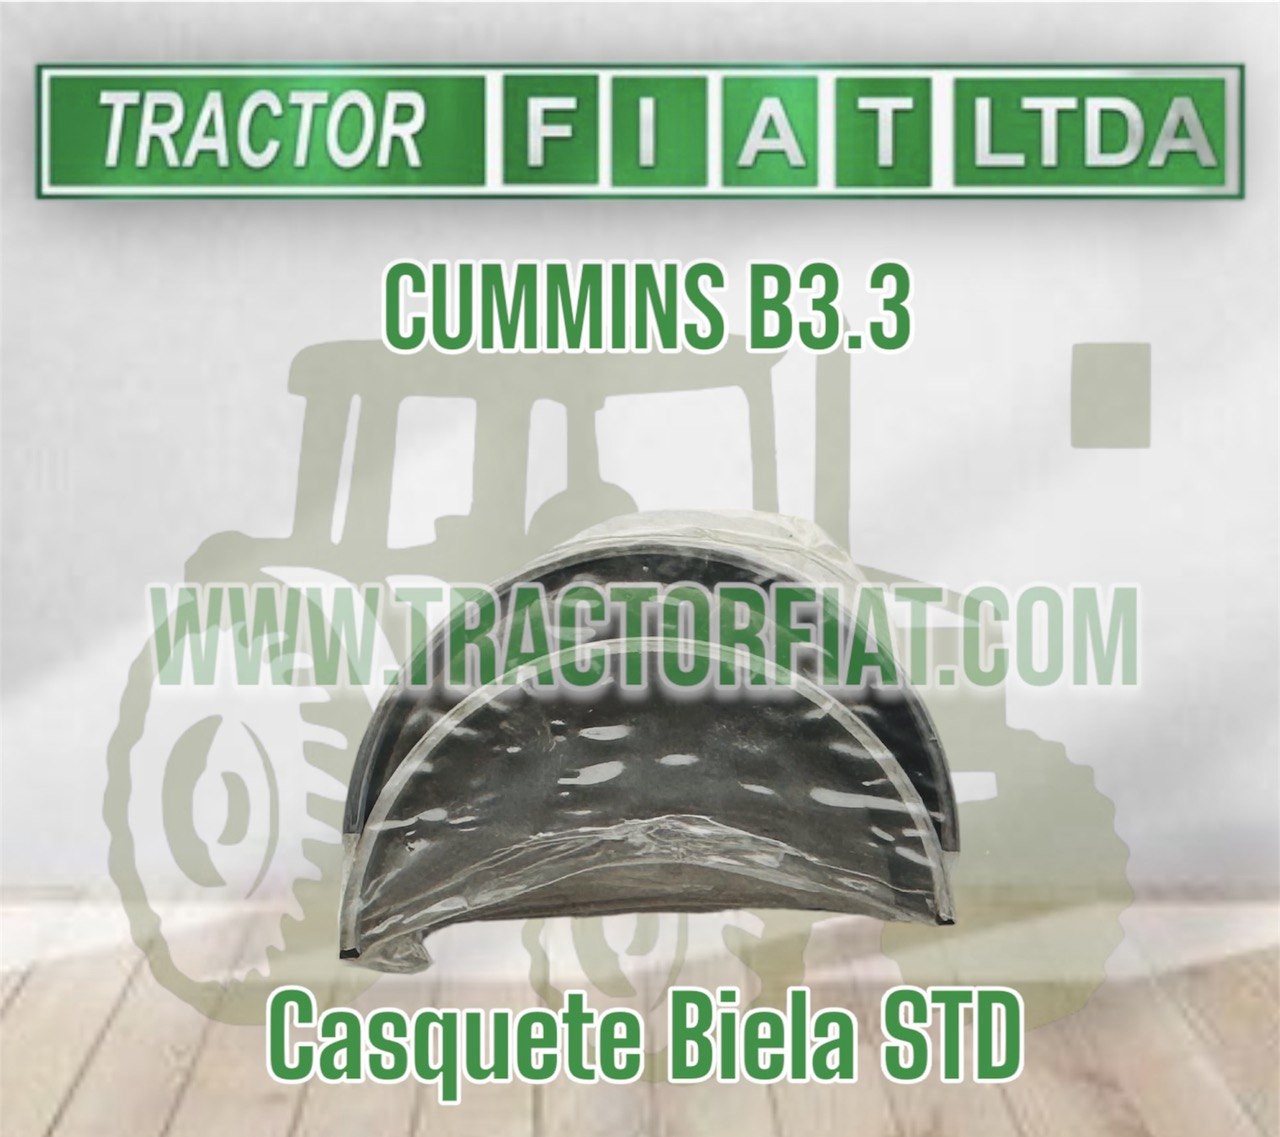 CASQUETES BIELA STD - MOTOR CUMMINS QSB3.3